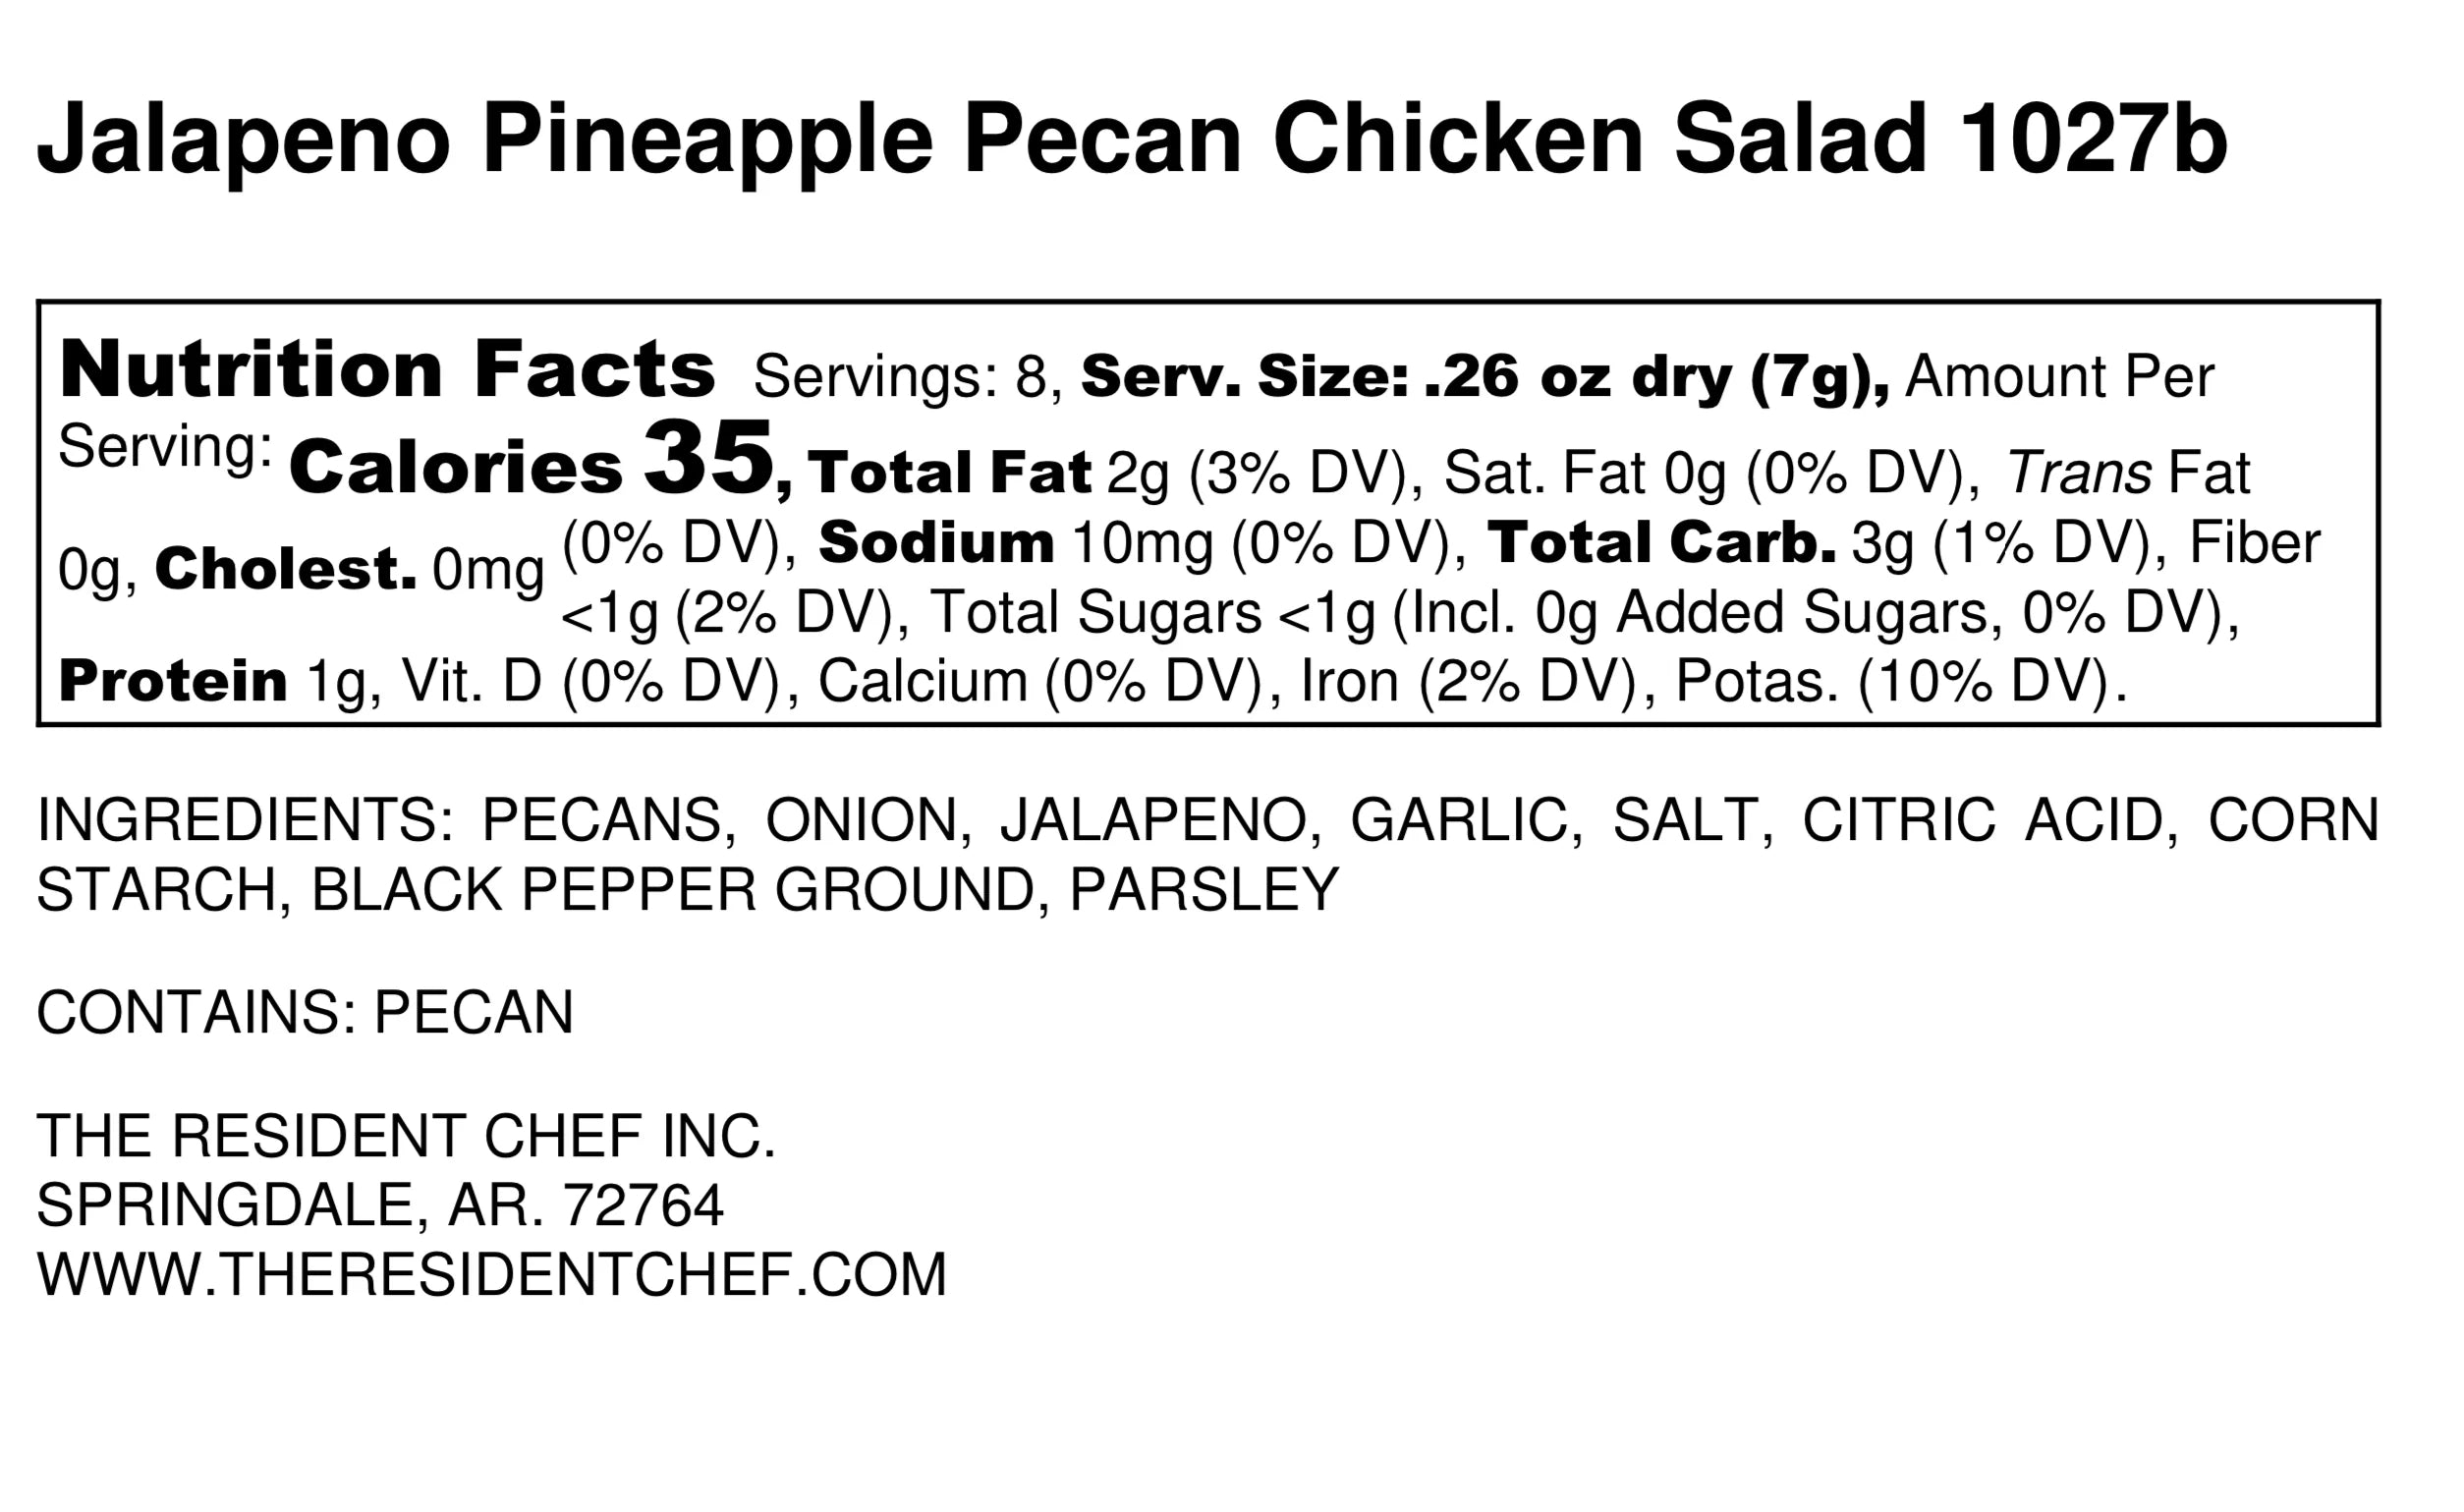 Resident Chef Jalapeno Pineapple Pecan Chicken Salad